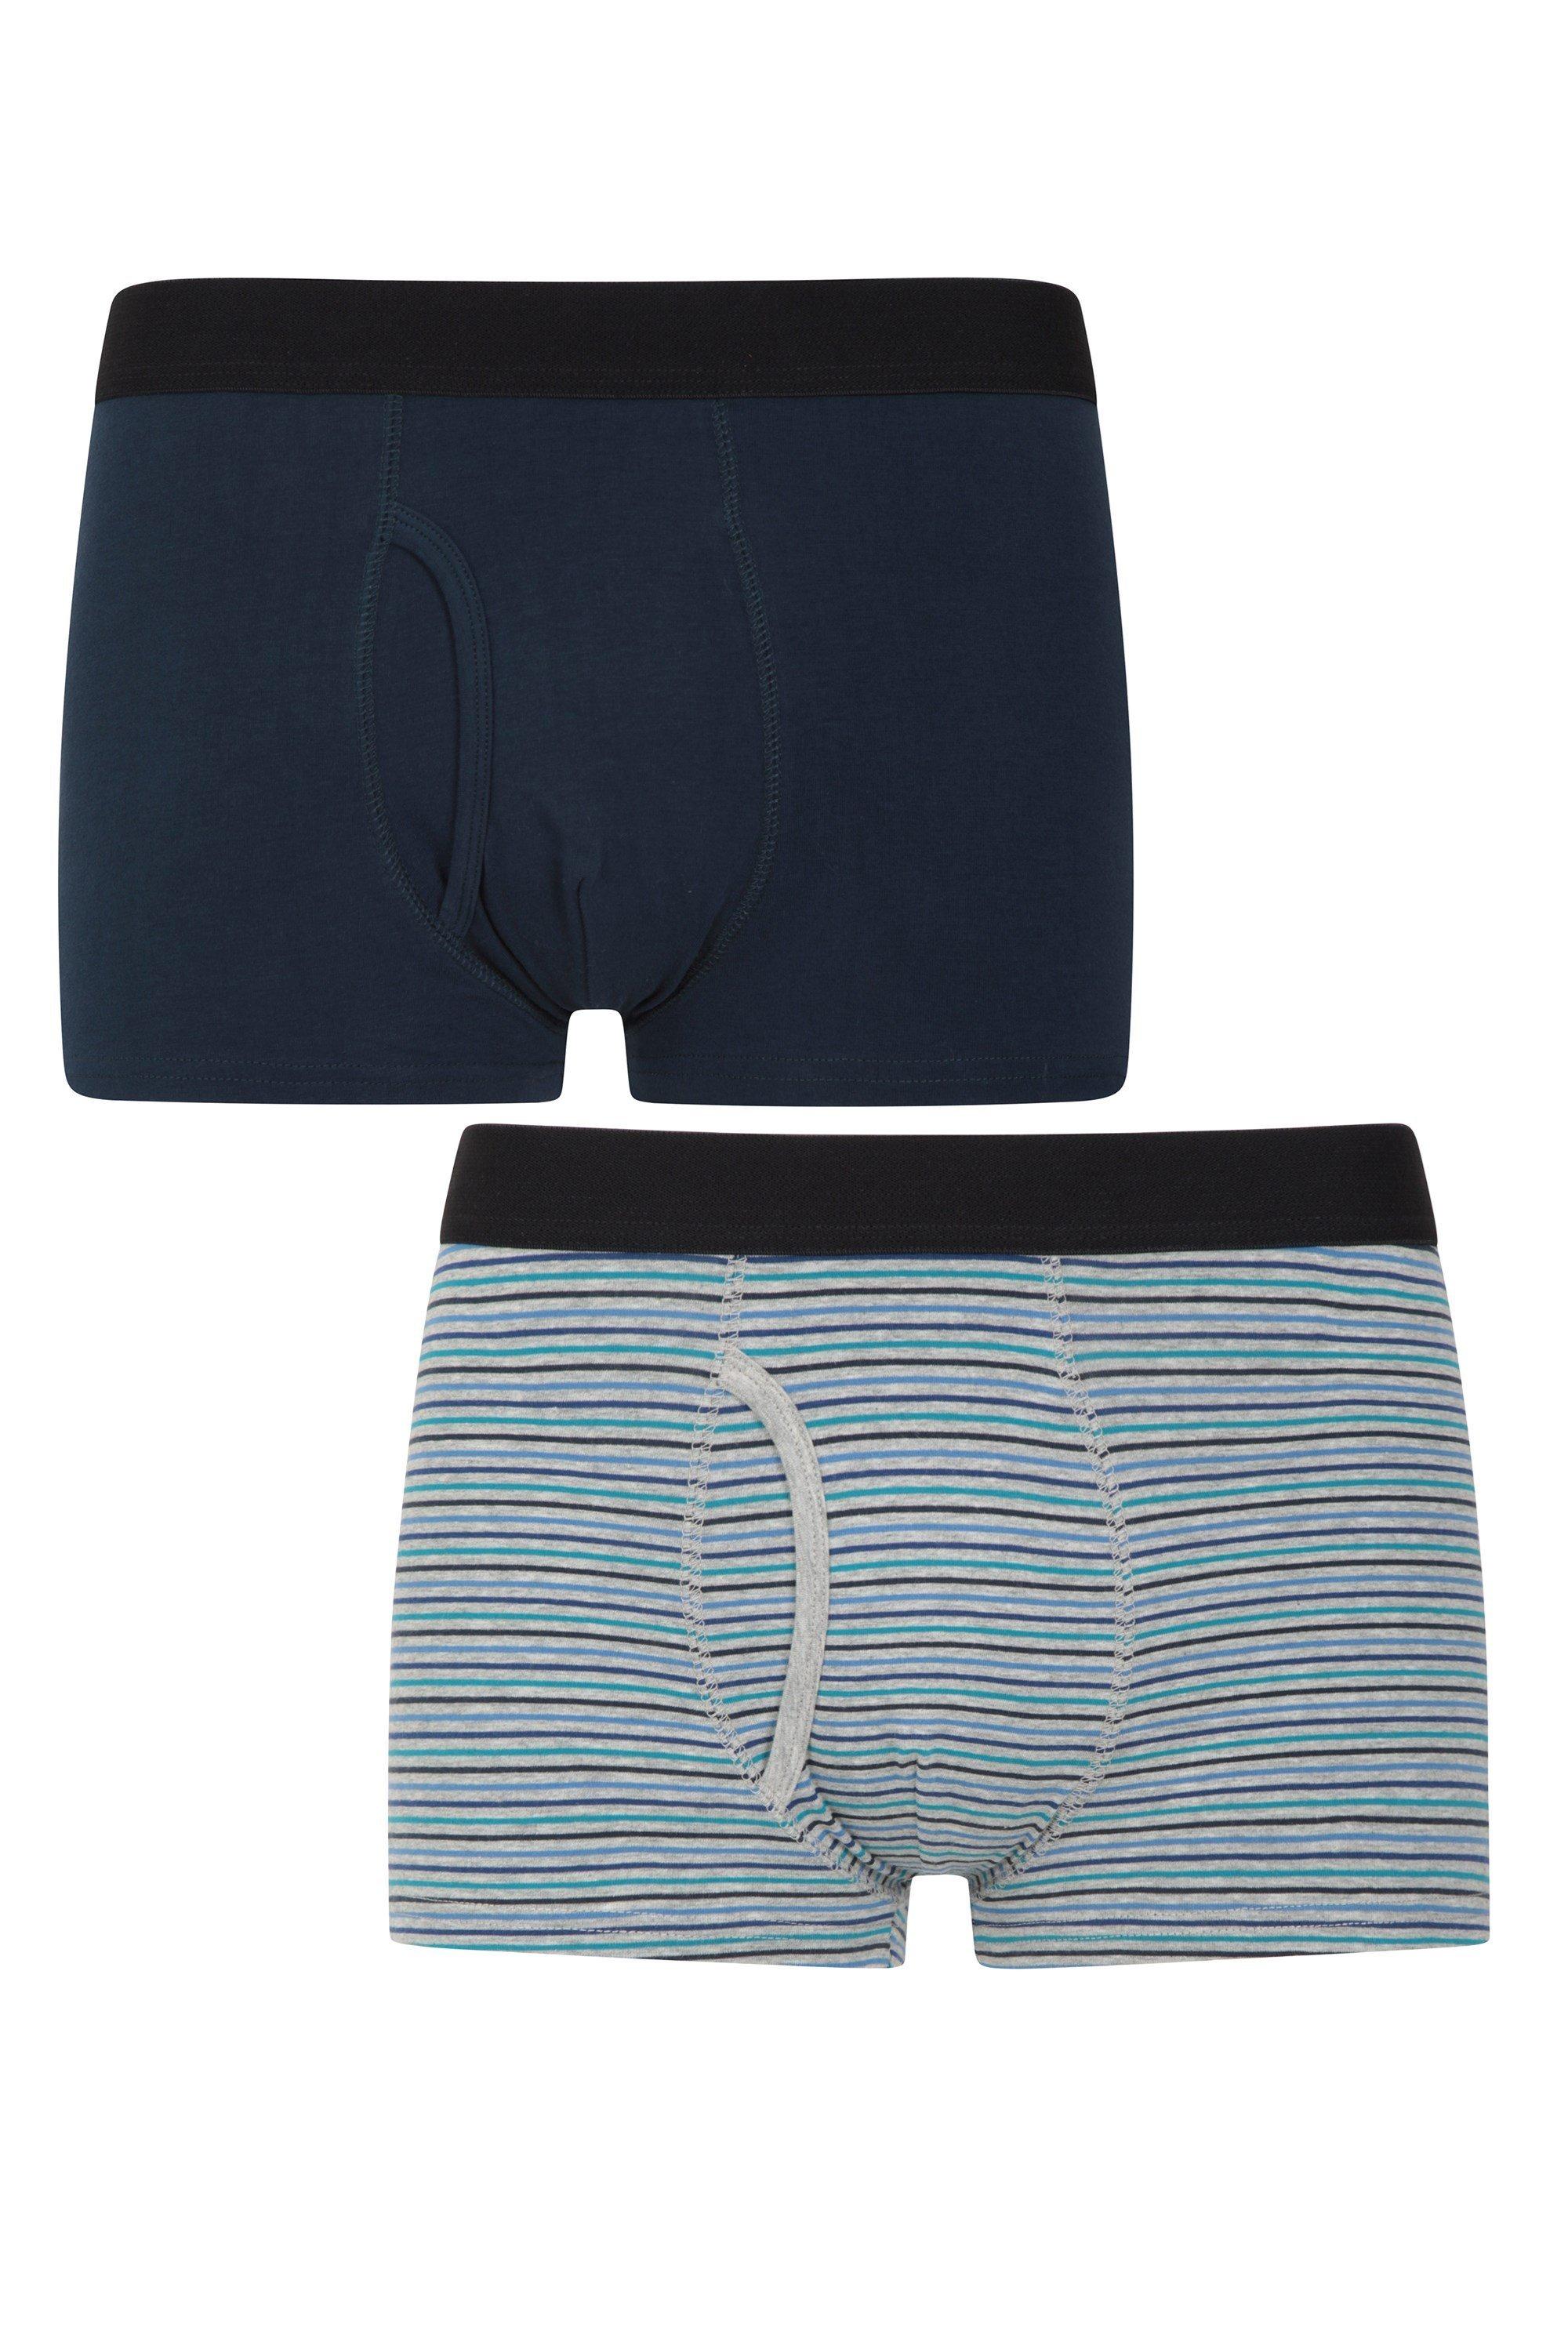 Stripe Boxers Elastic Waist Cotton Underwear Multipack